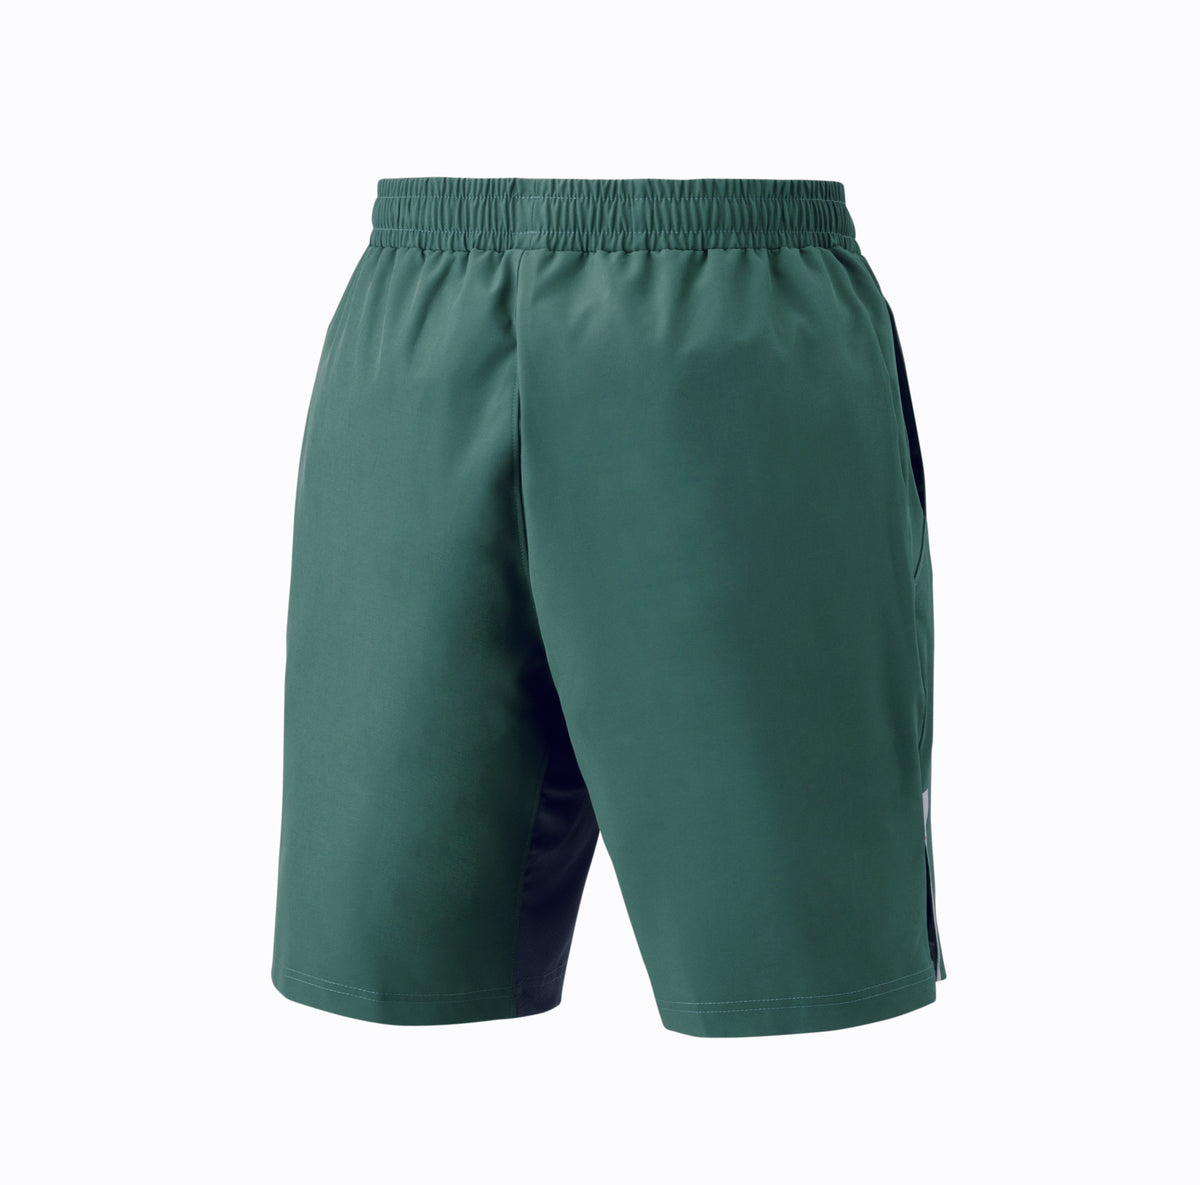 Yonex 15163 Shorts Mens (Olive)